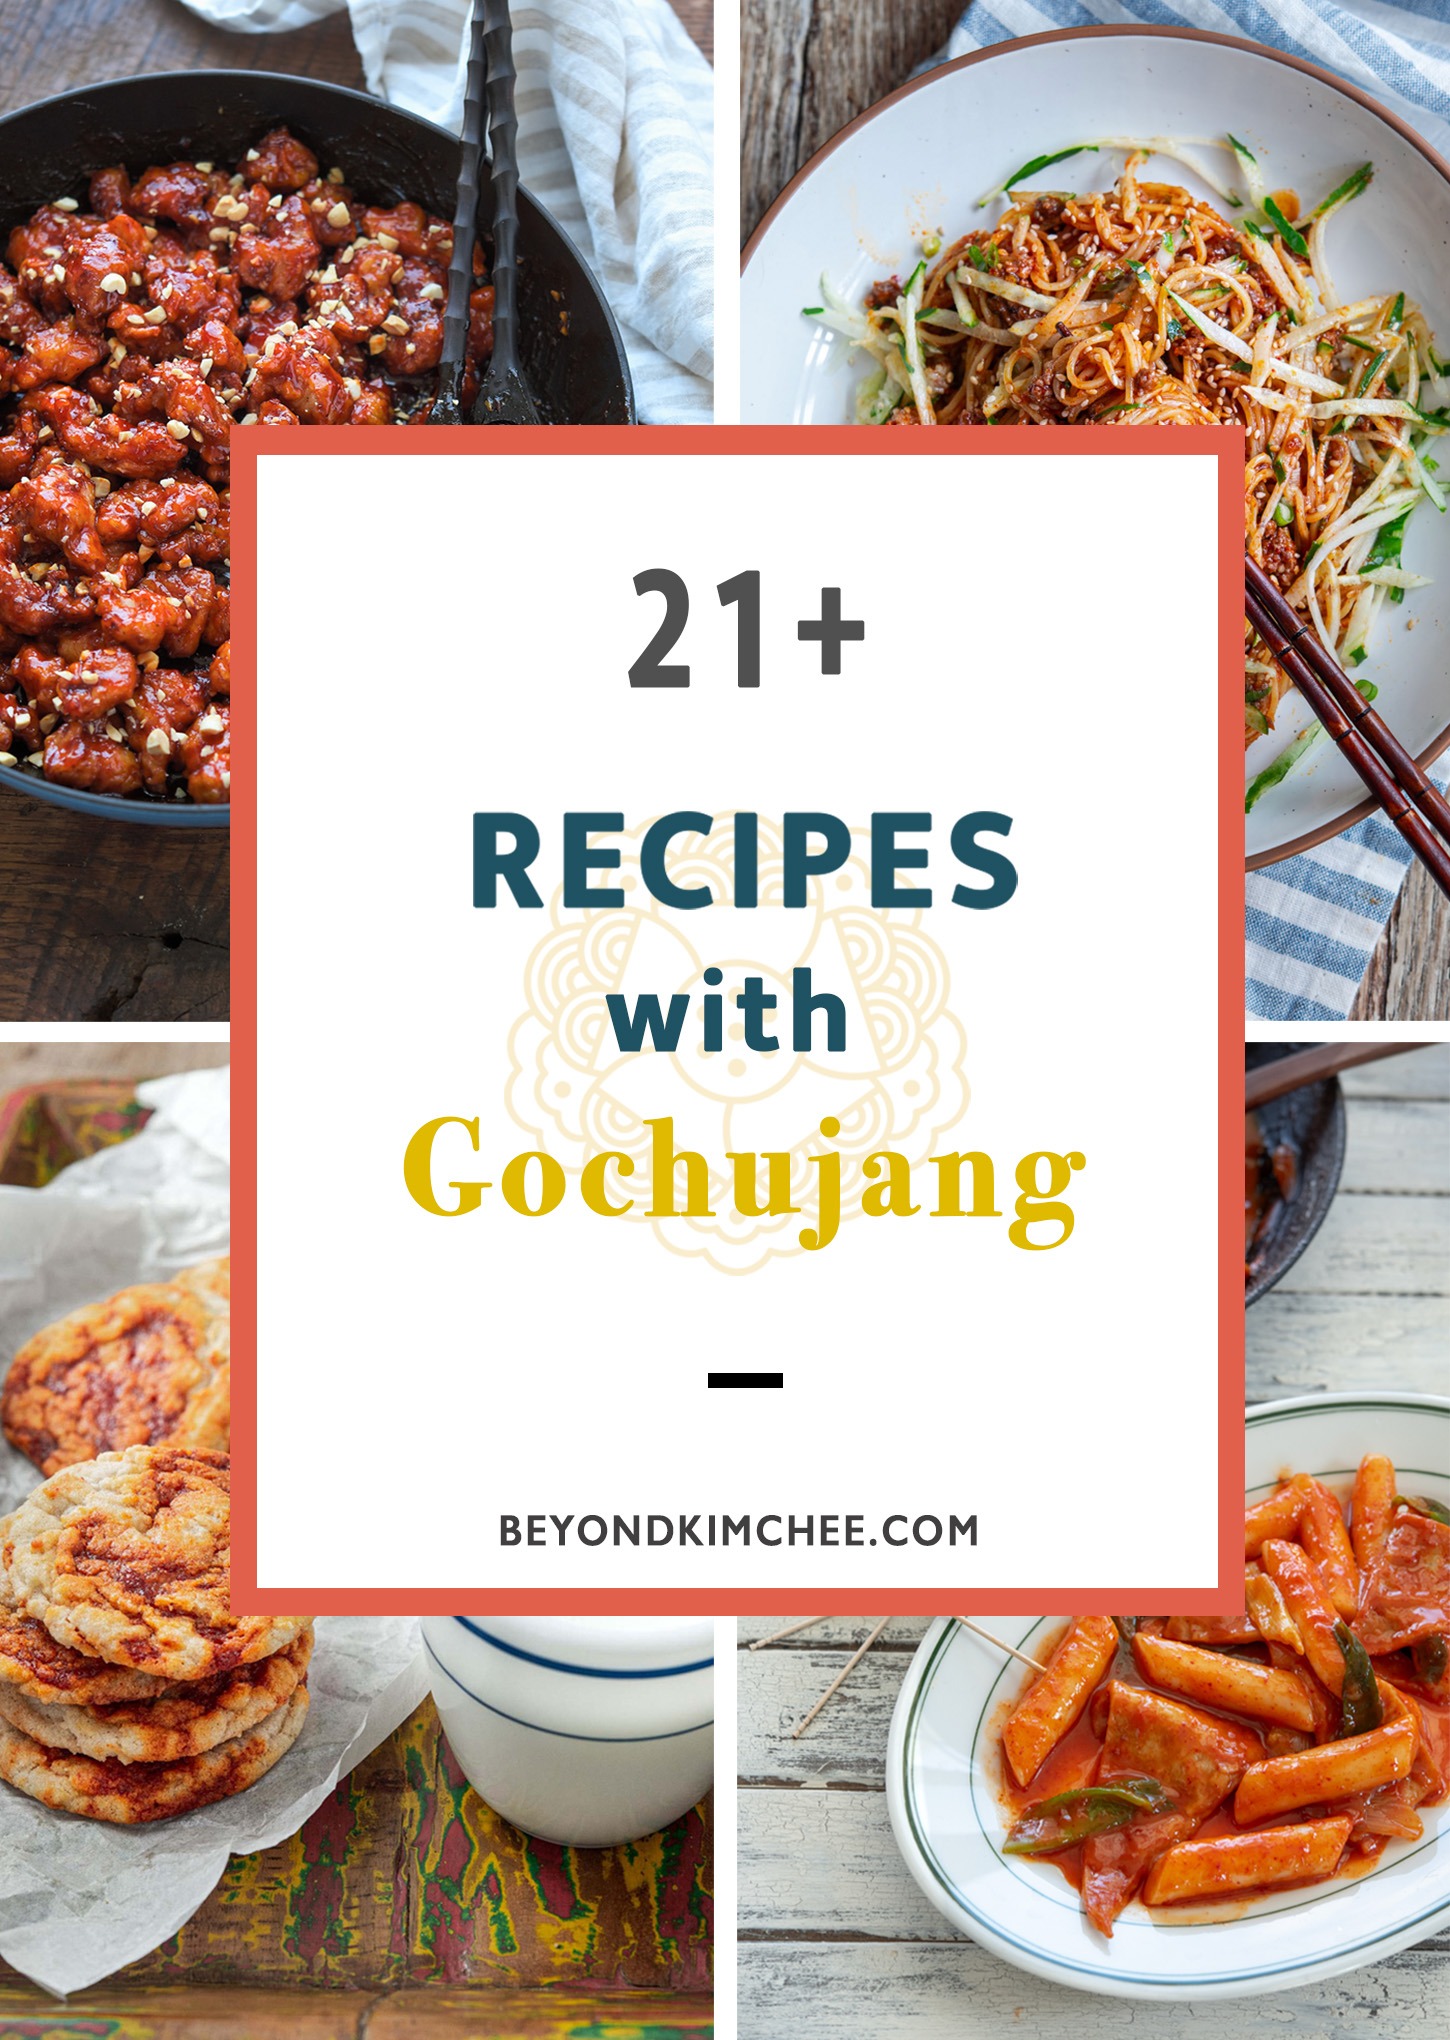 Recipes using gochujang collected as a roundup.